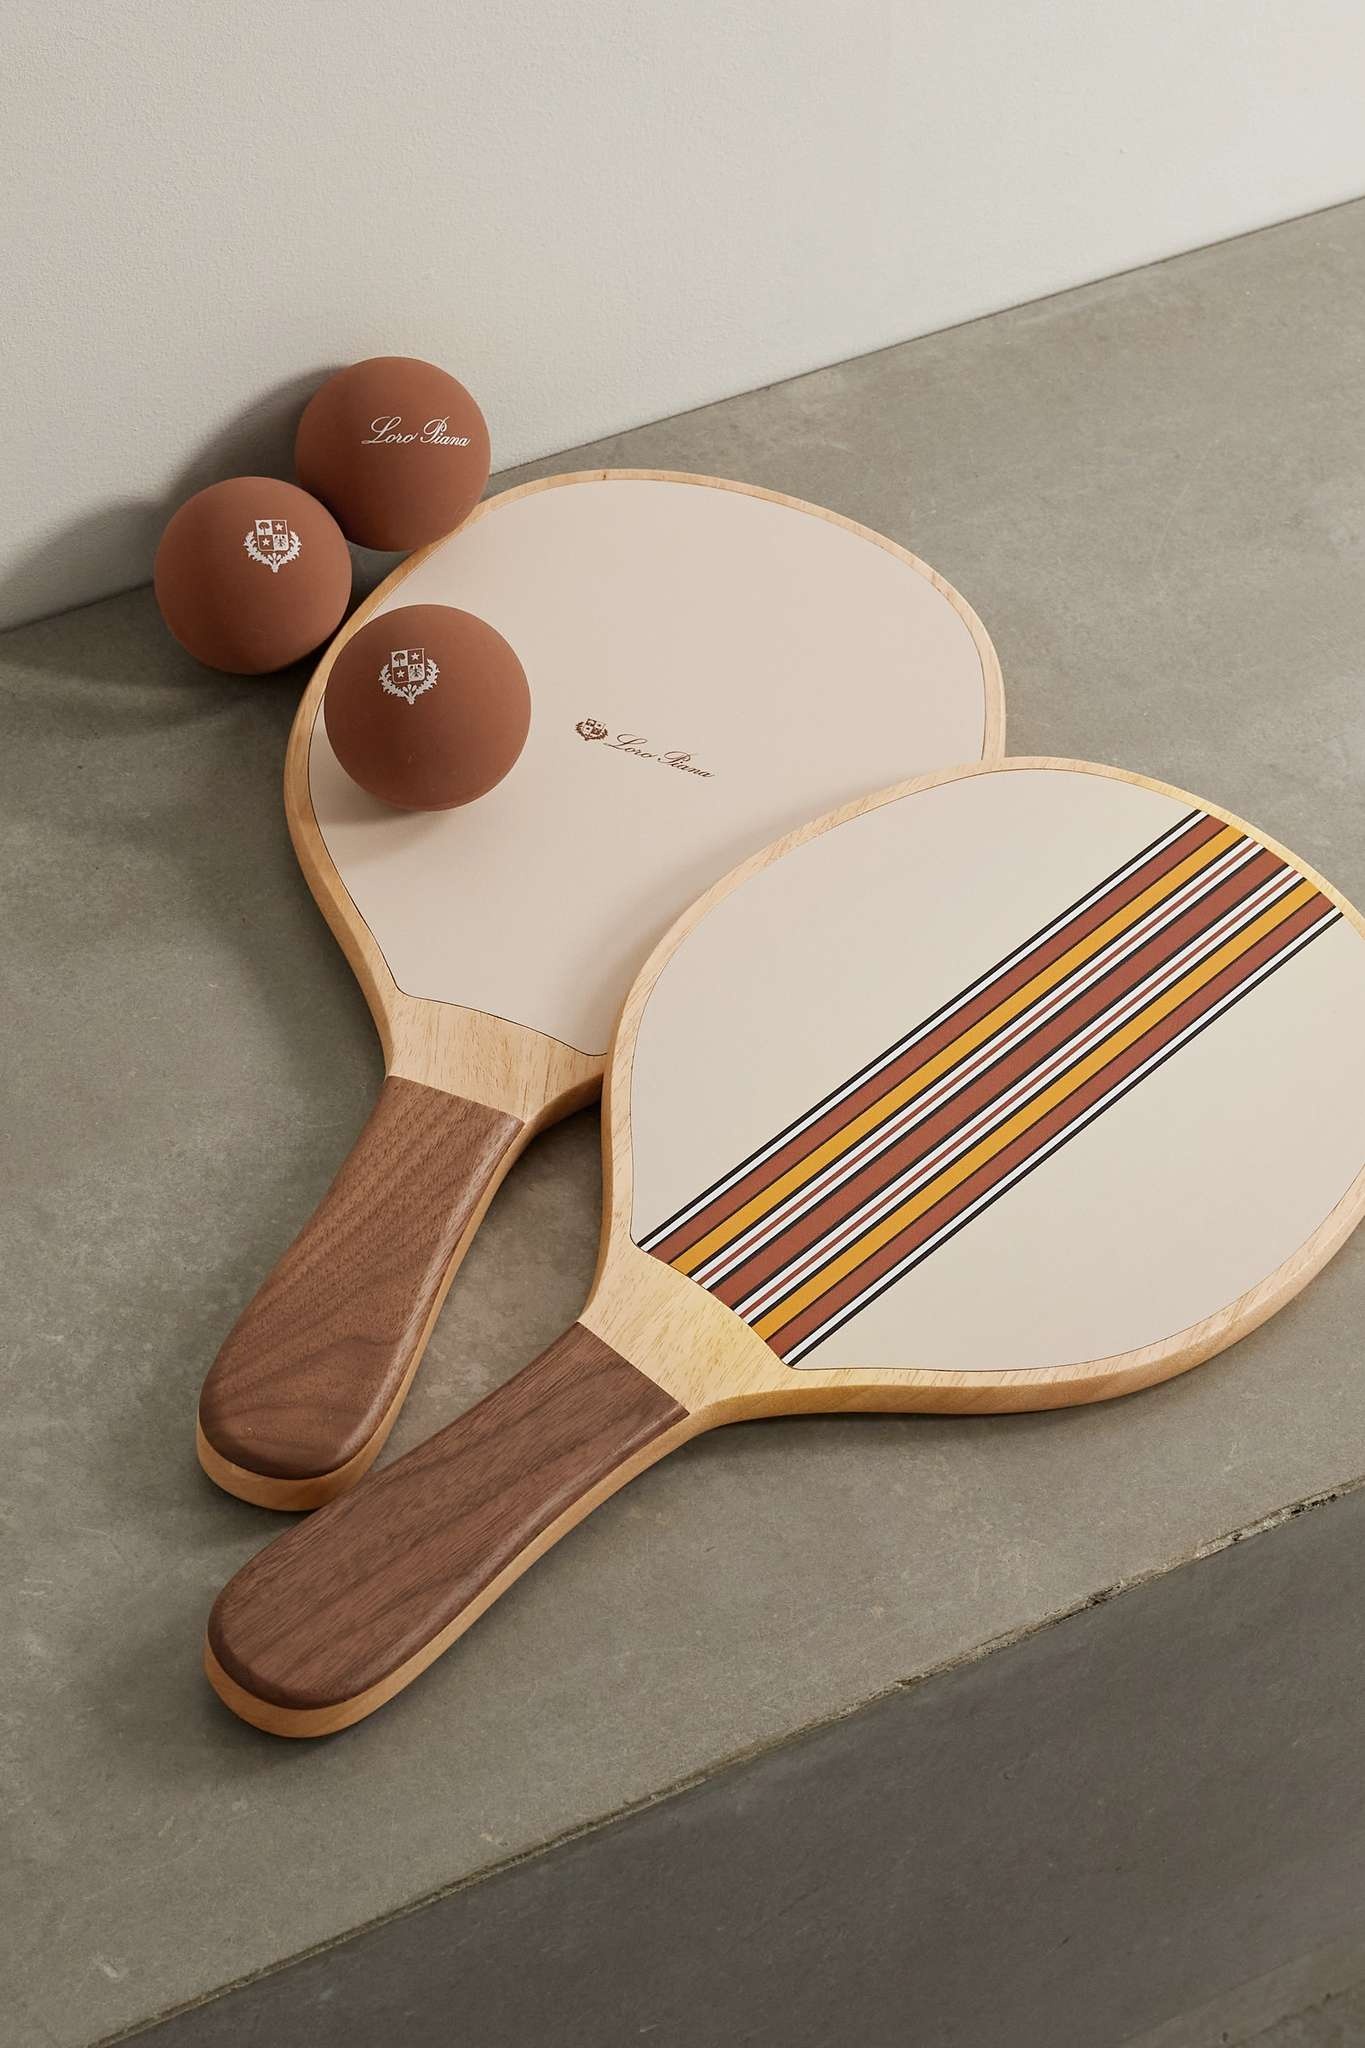 The Suitcase Stripe wood and leather paddleball set - 1